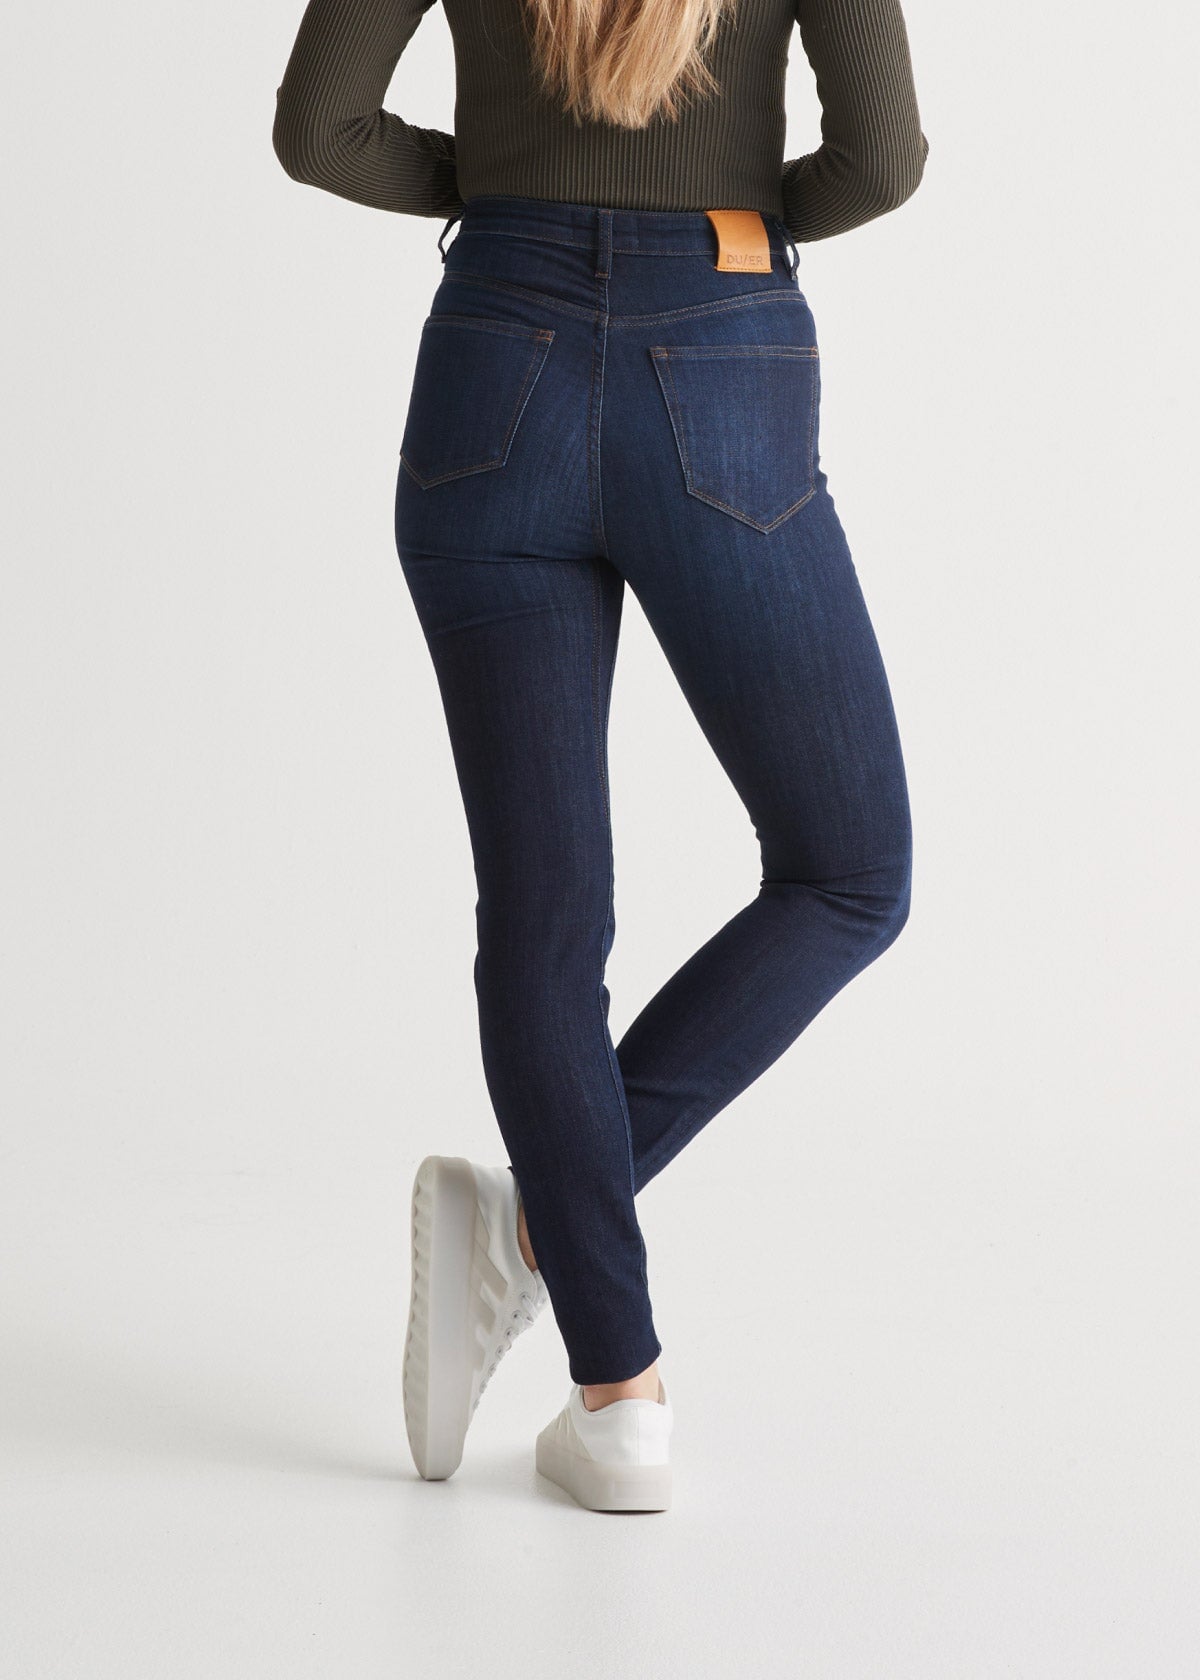 Mid Rise Skinny Women's Jeans - Dark Wash